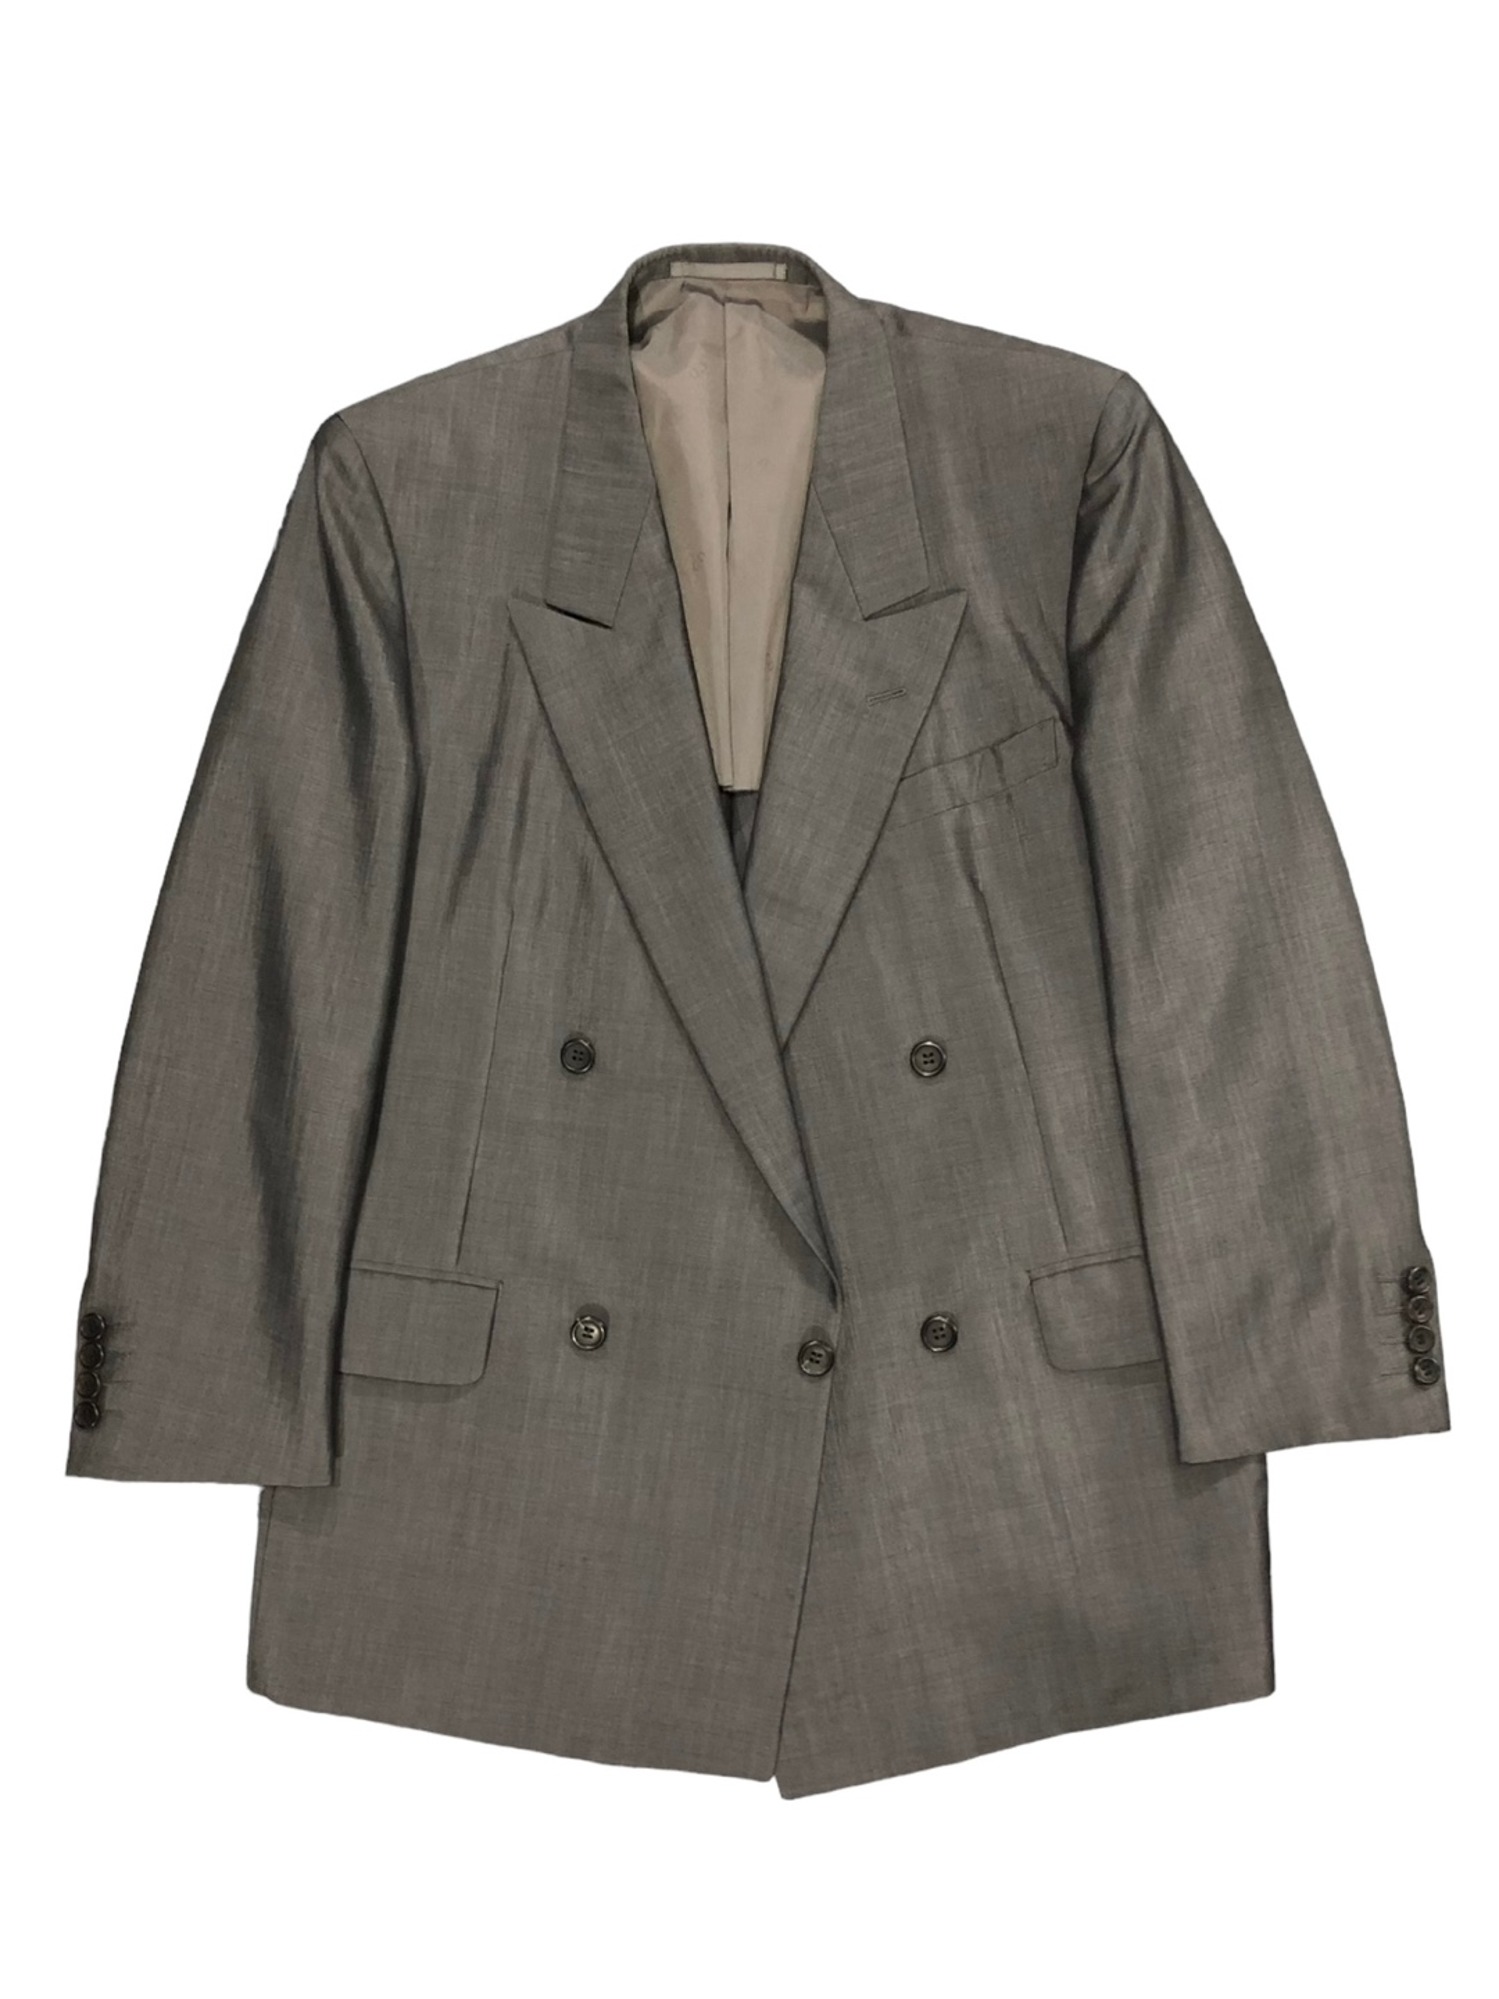 Christian Dior Overfit Double Button Blazer ( Cashmere 5% )